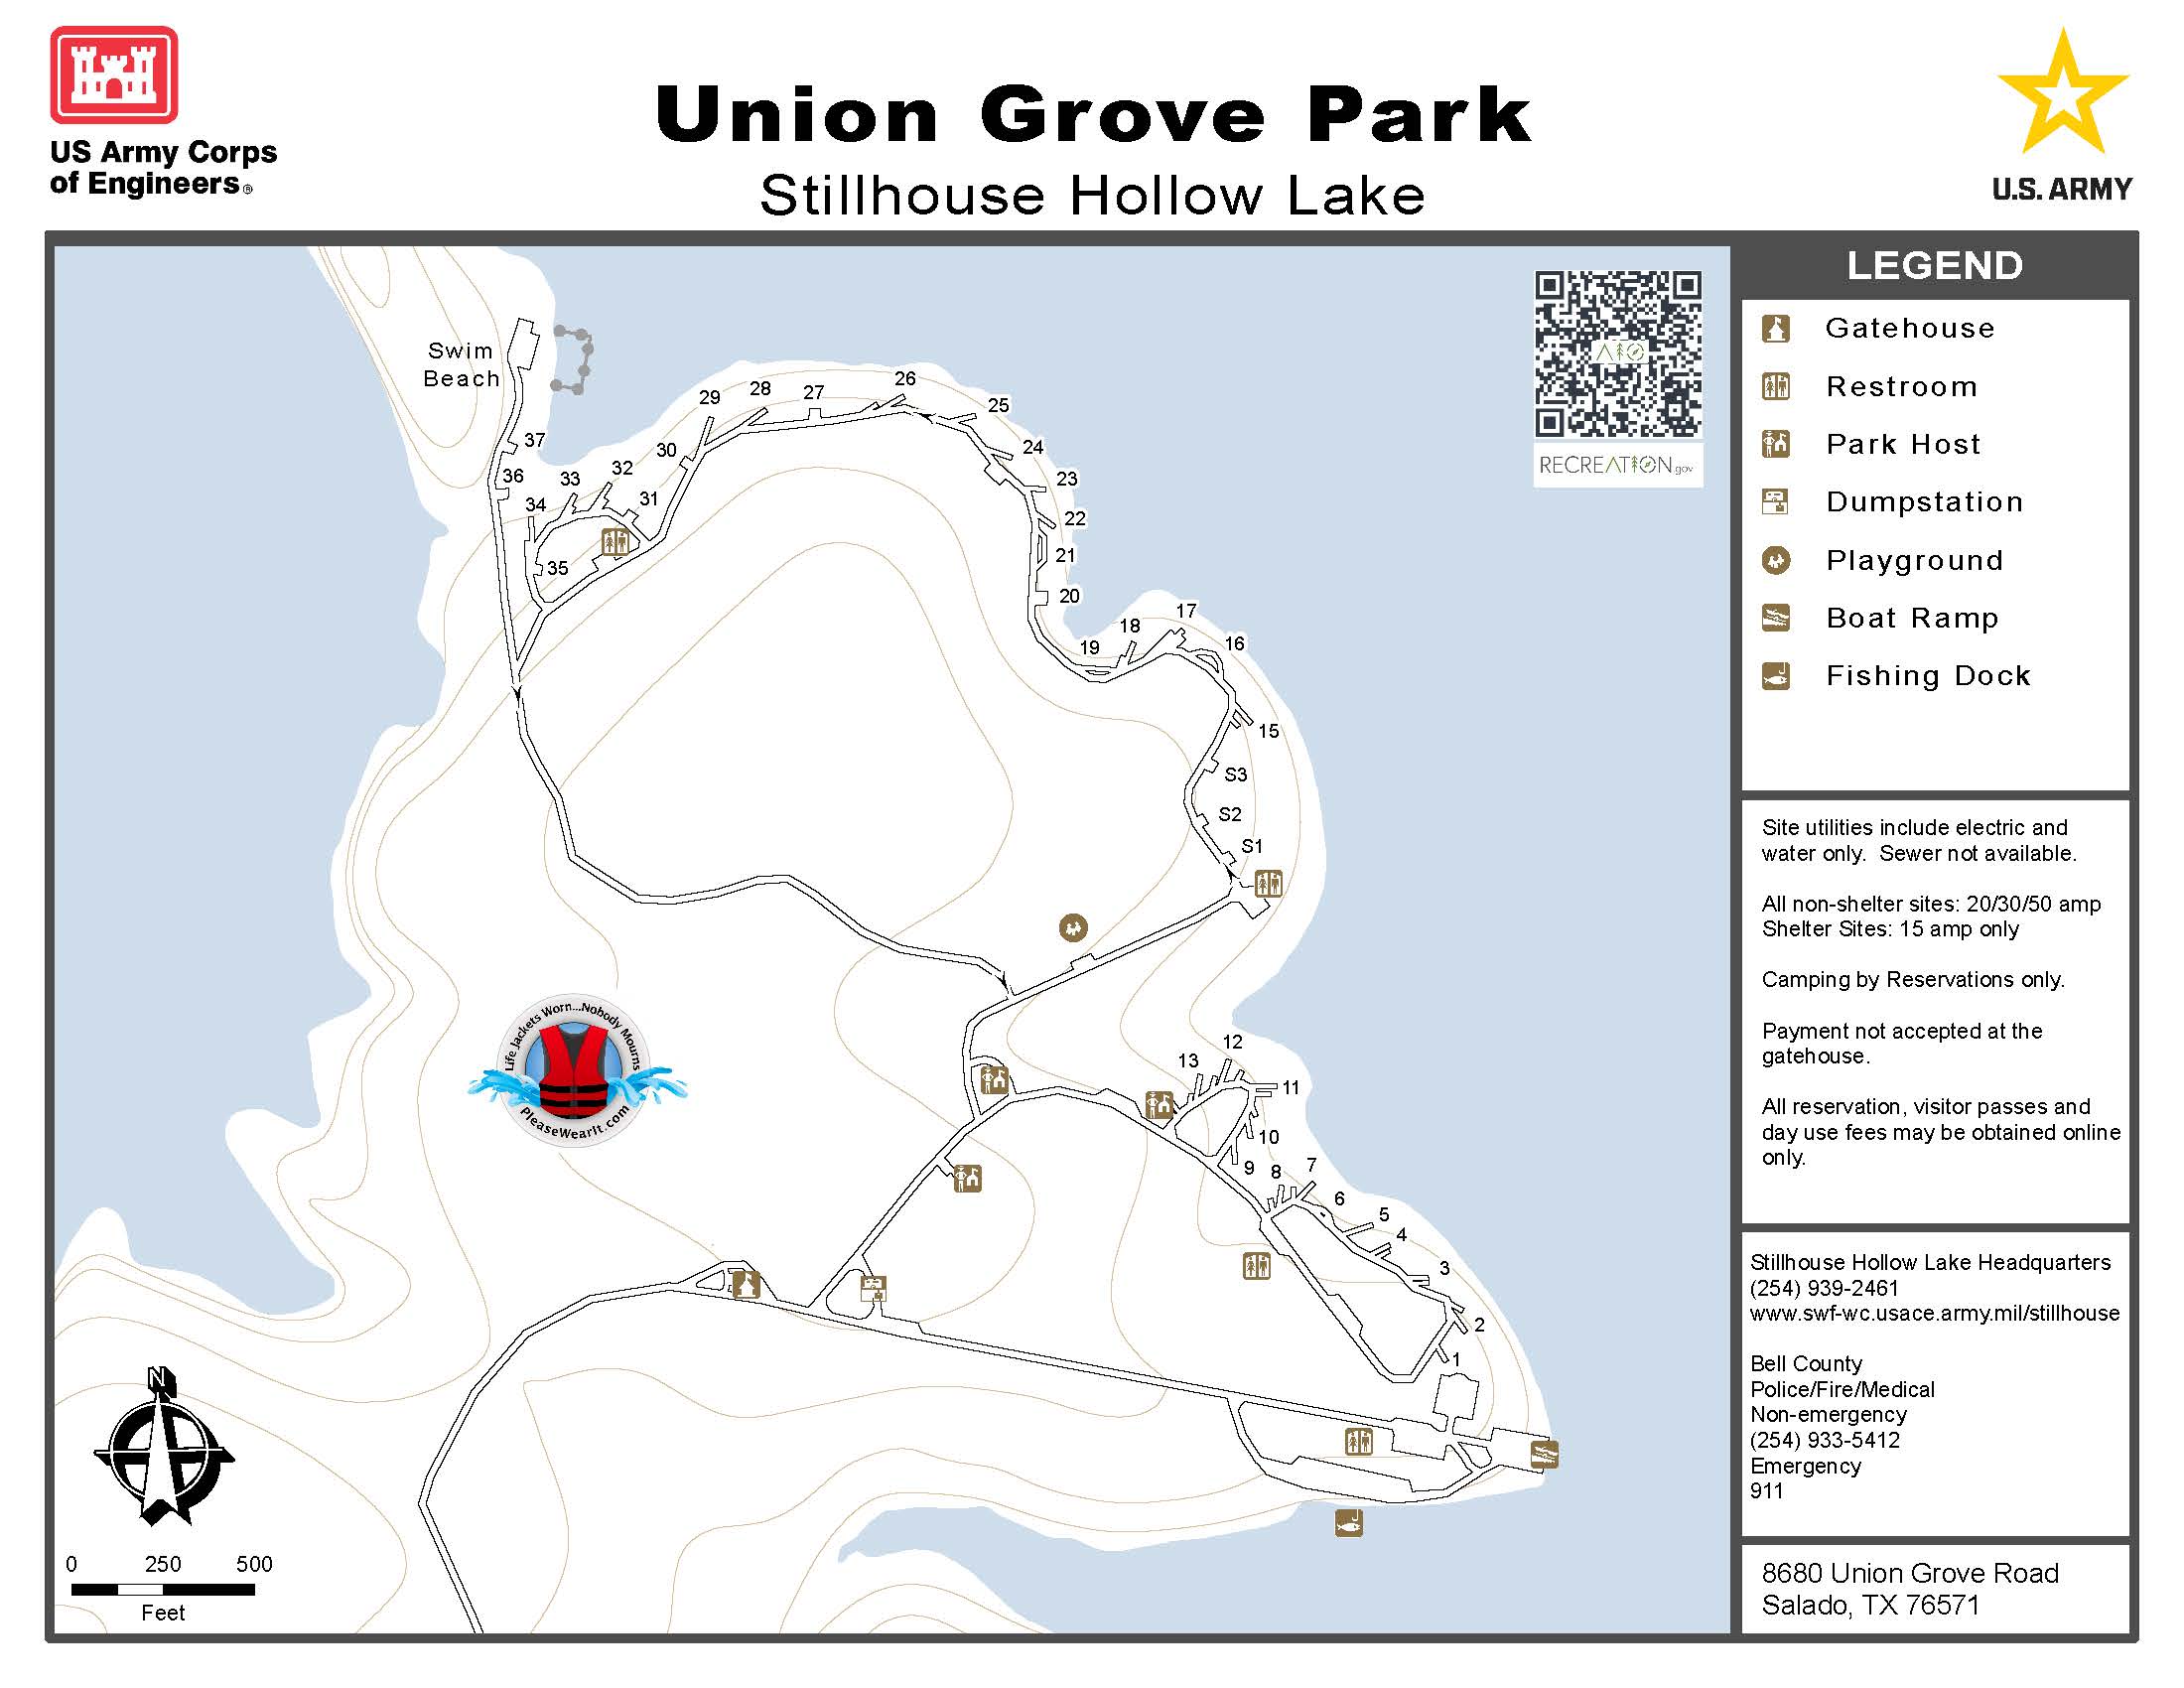 Union Grove Park